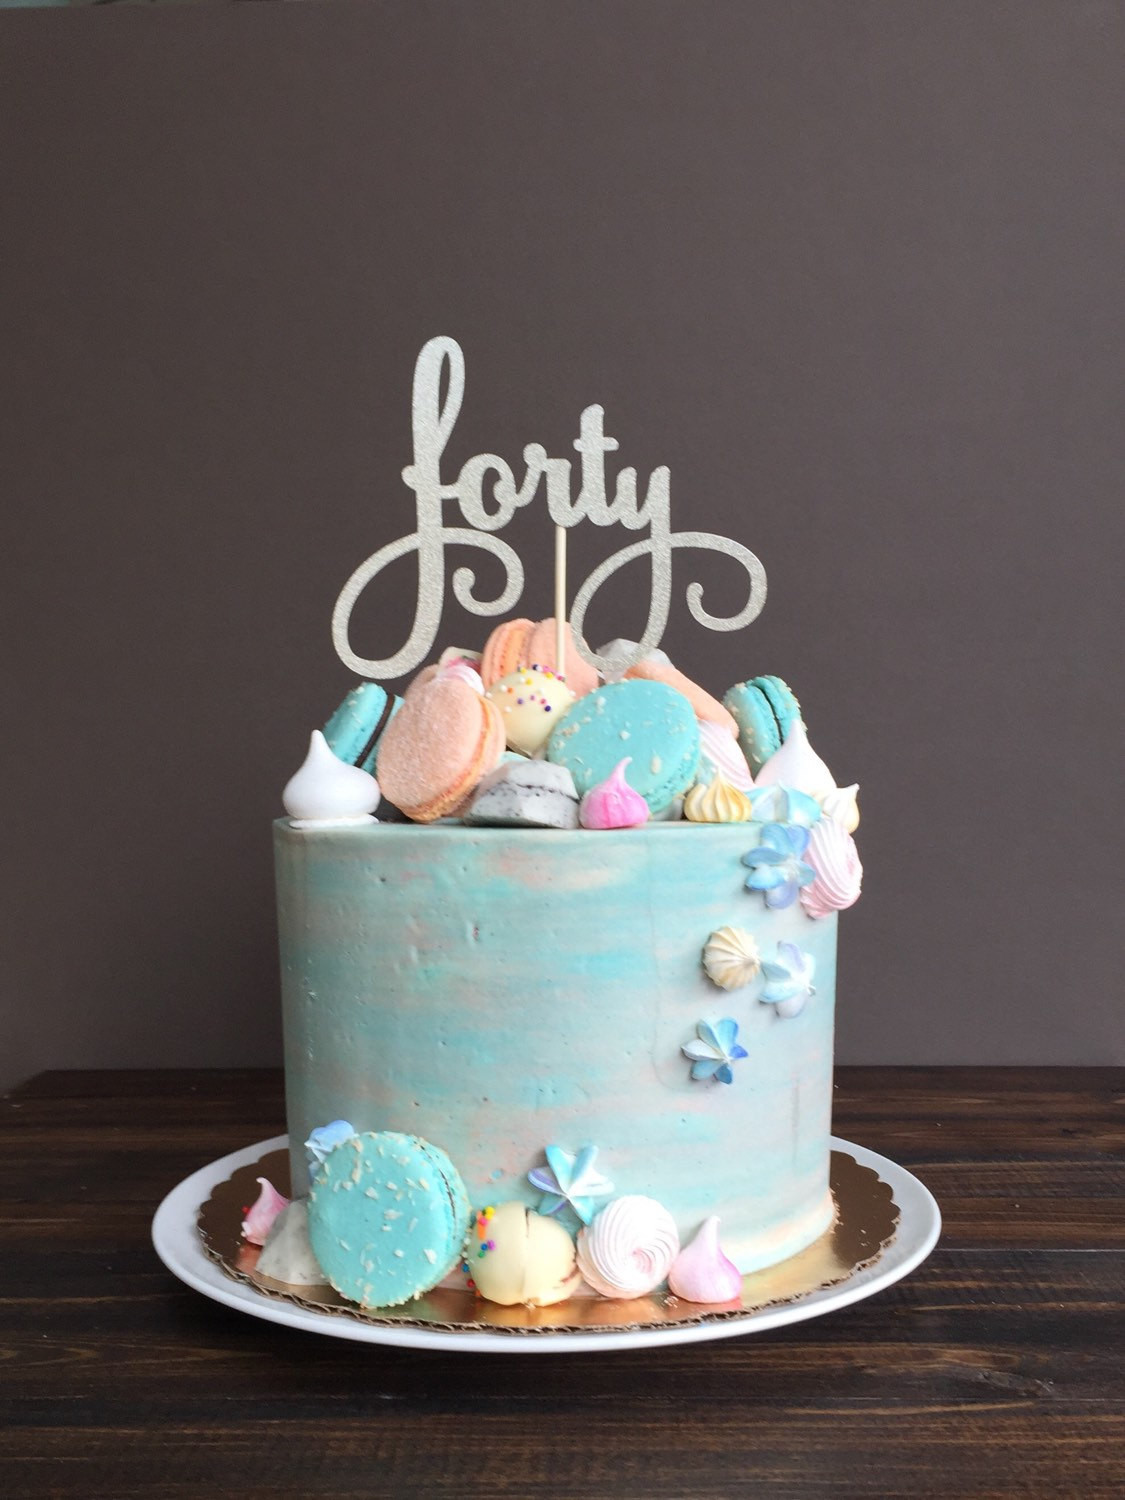 40th Birthday Cake Decorating Ideas
 Cake topper forty cake topper 40th birthday cake topper